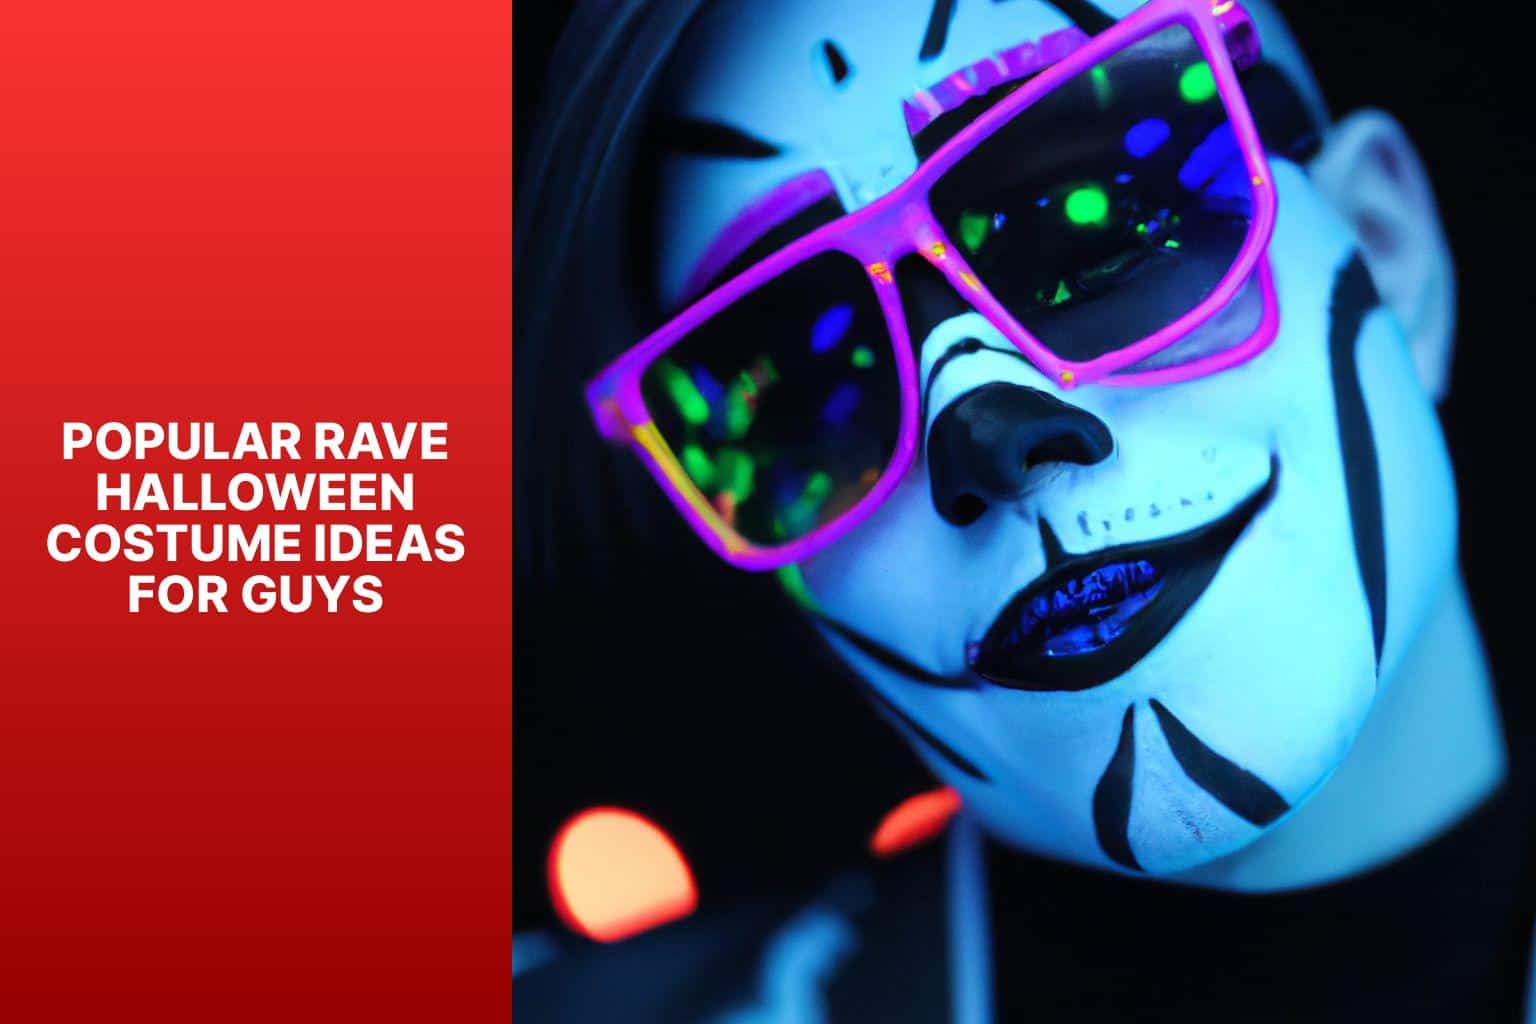 Popular Rave Halloween Costume Ideas for Guys - rave halloween costumes for guys 